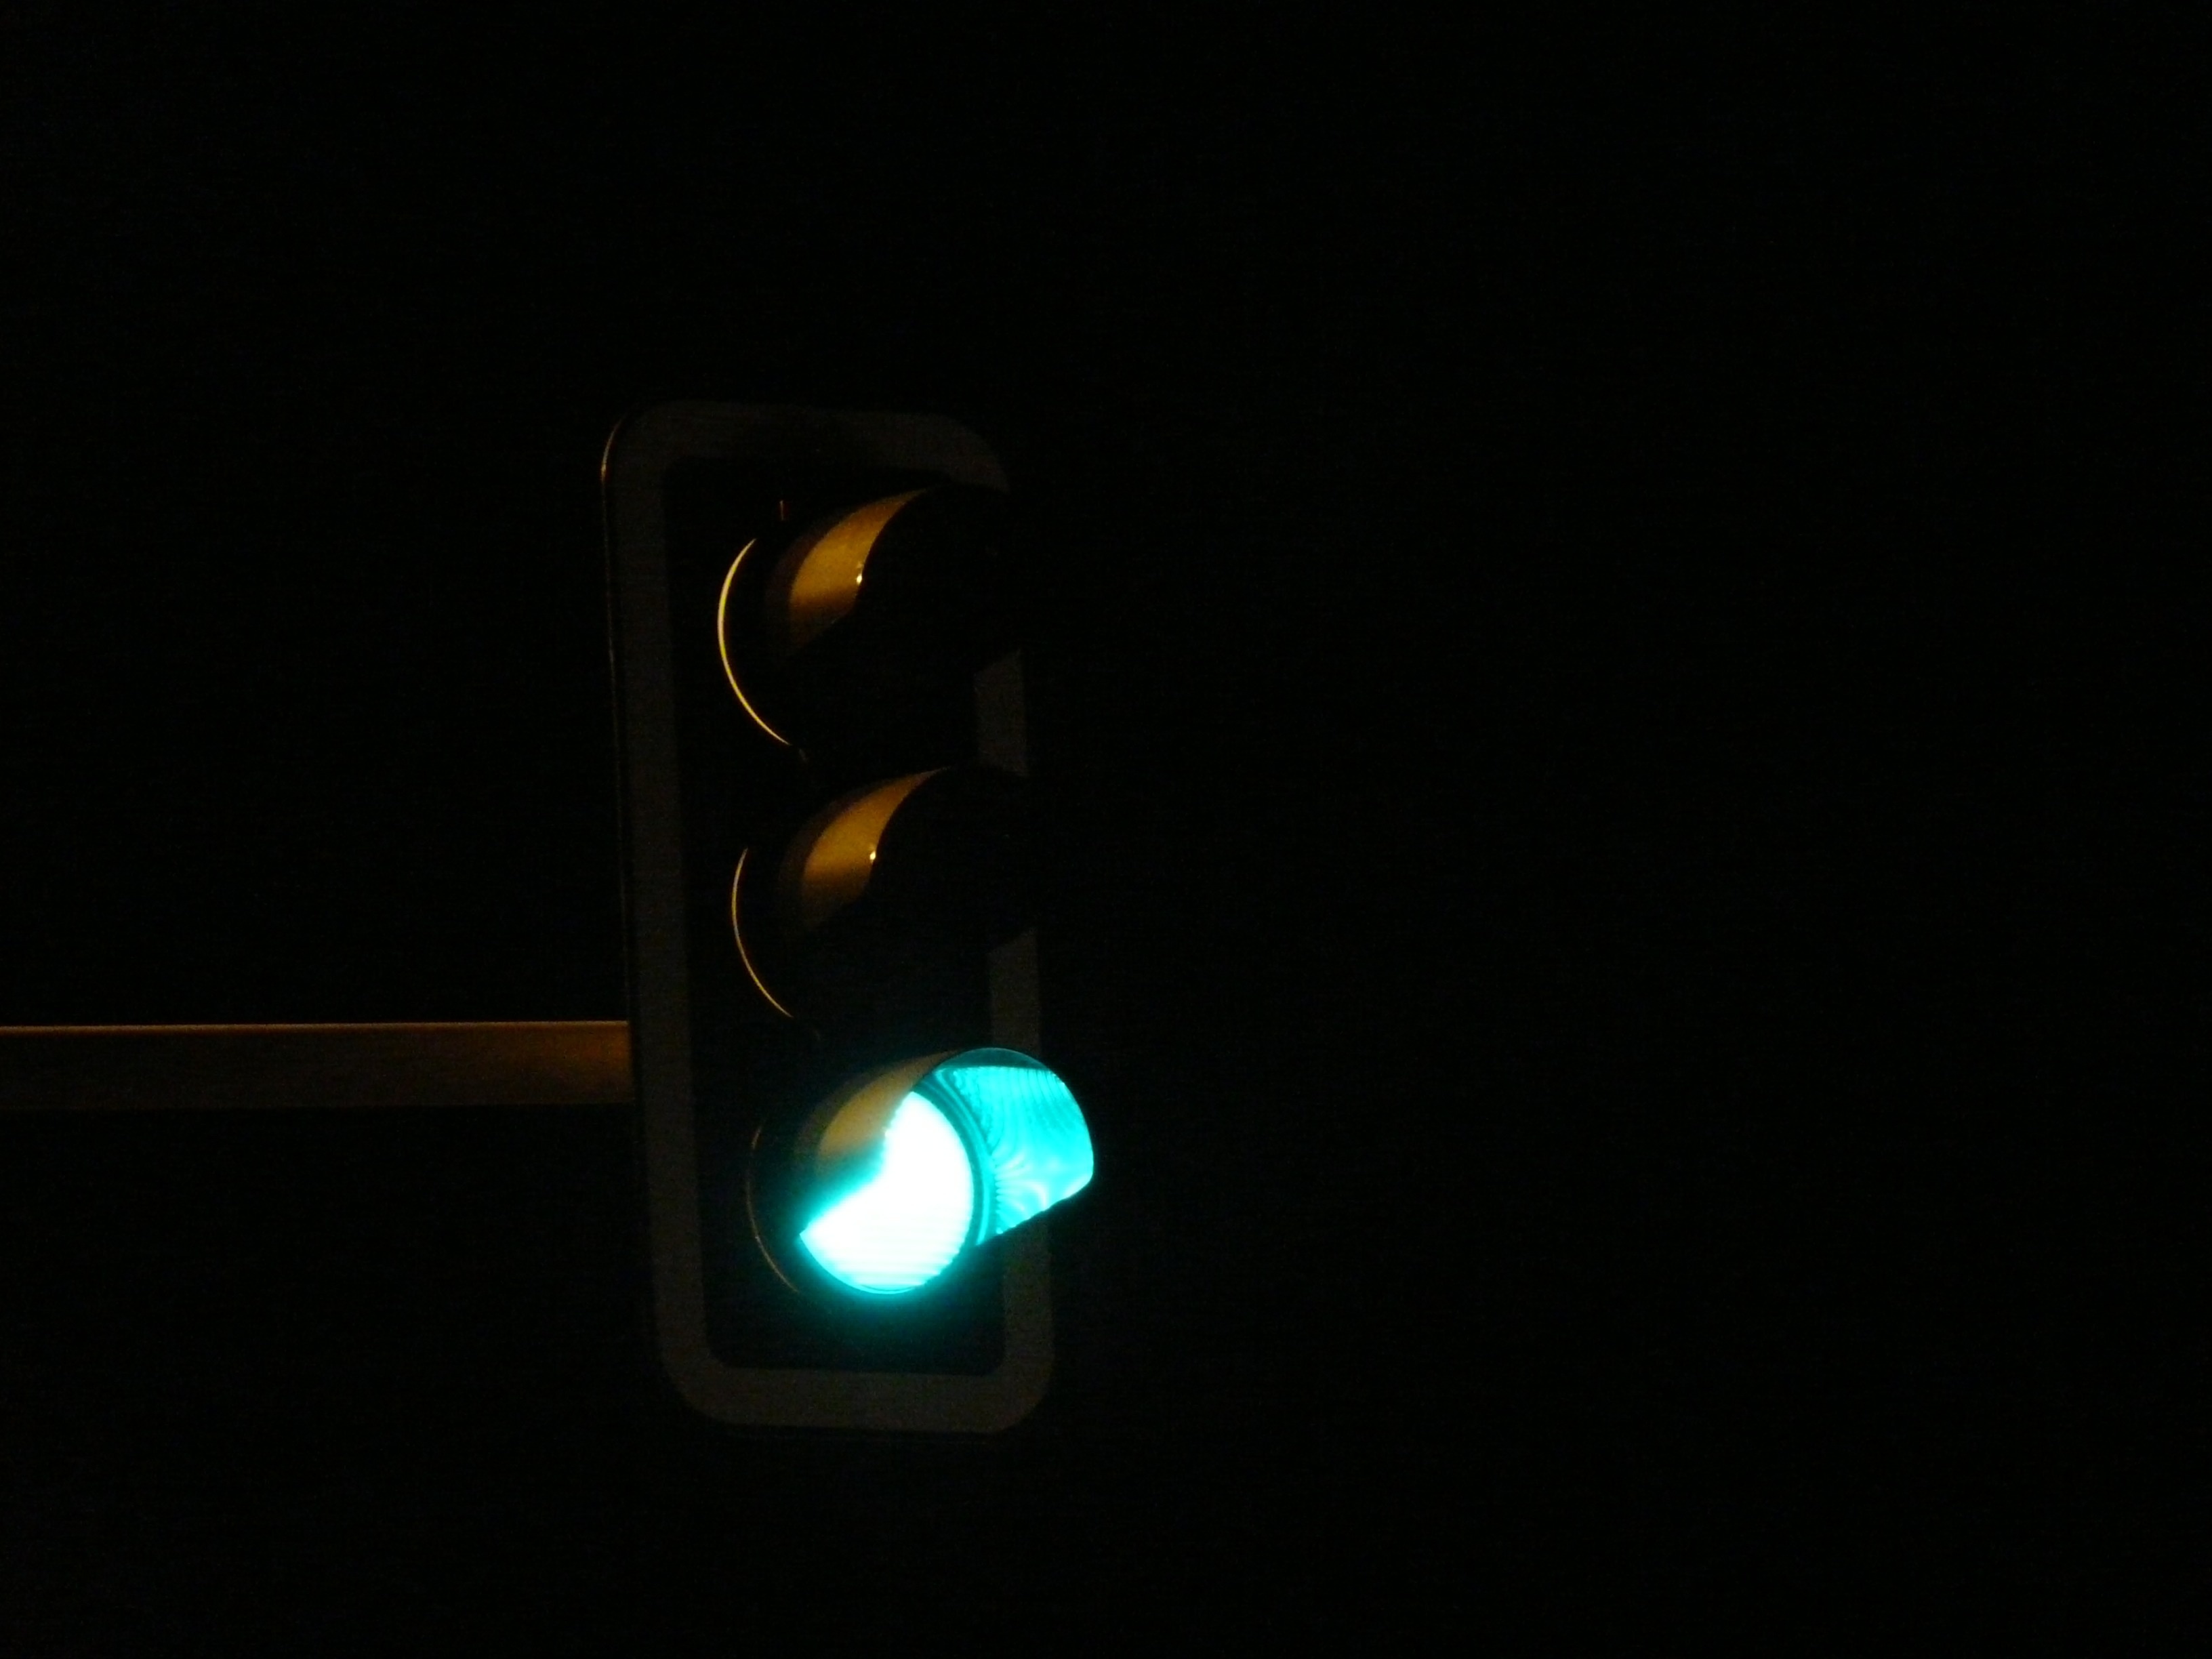 Green Traffic Light Image